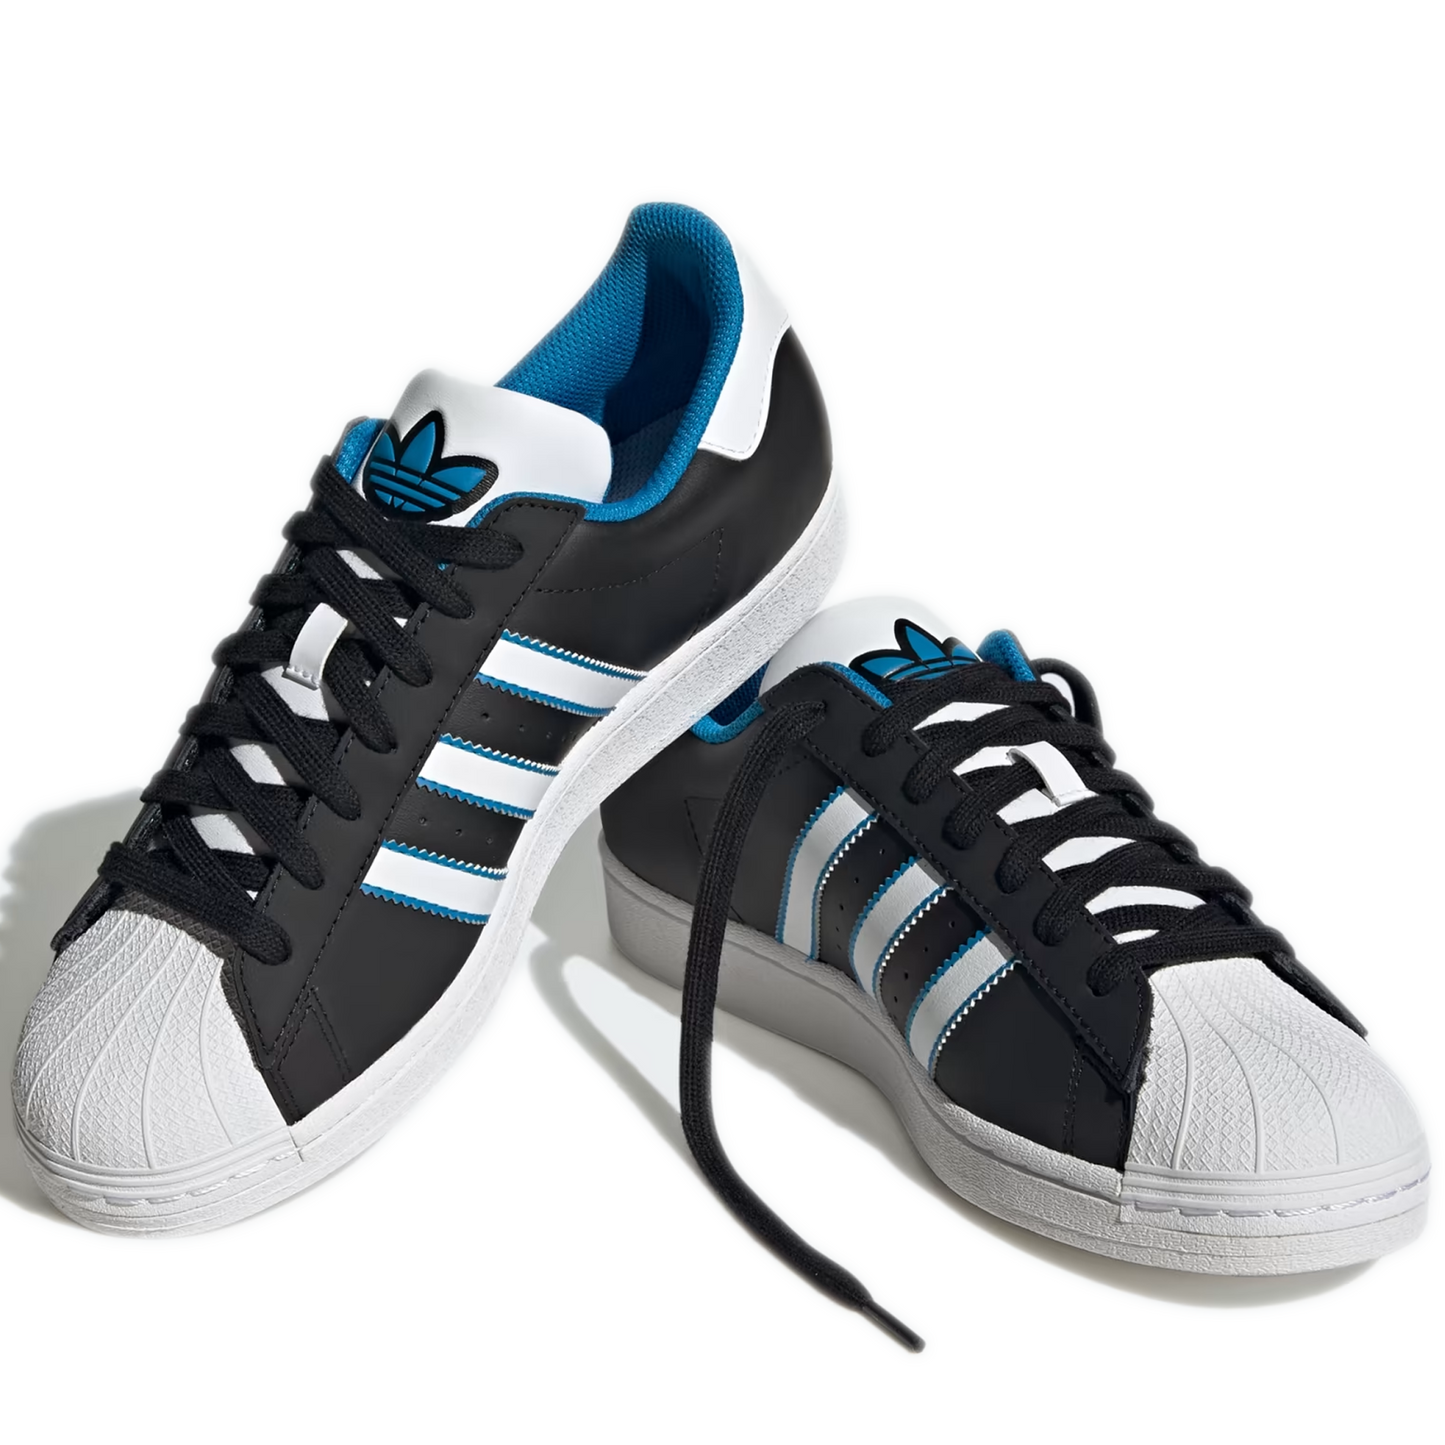 Men's Adidas Superstar Shoes - Black/ White/ Blue